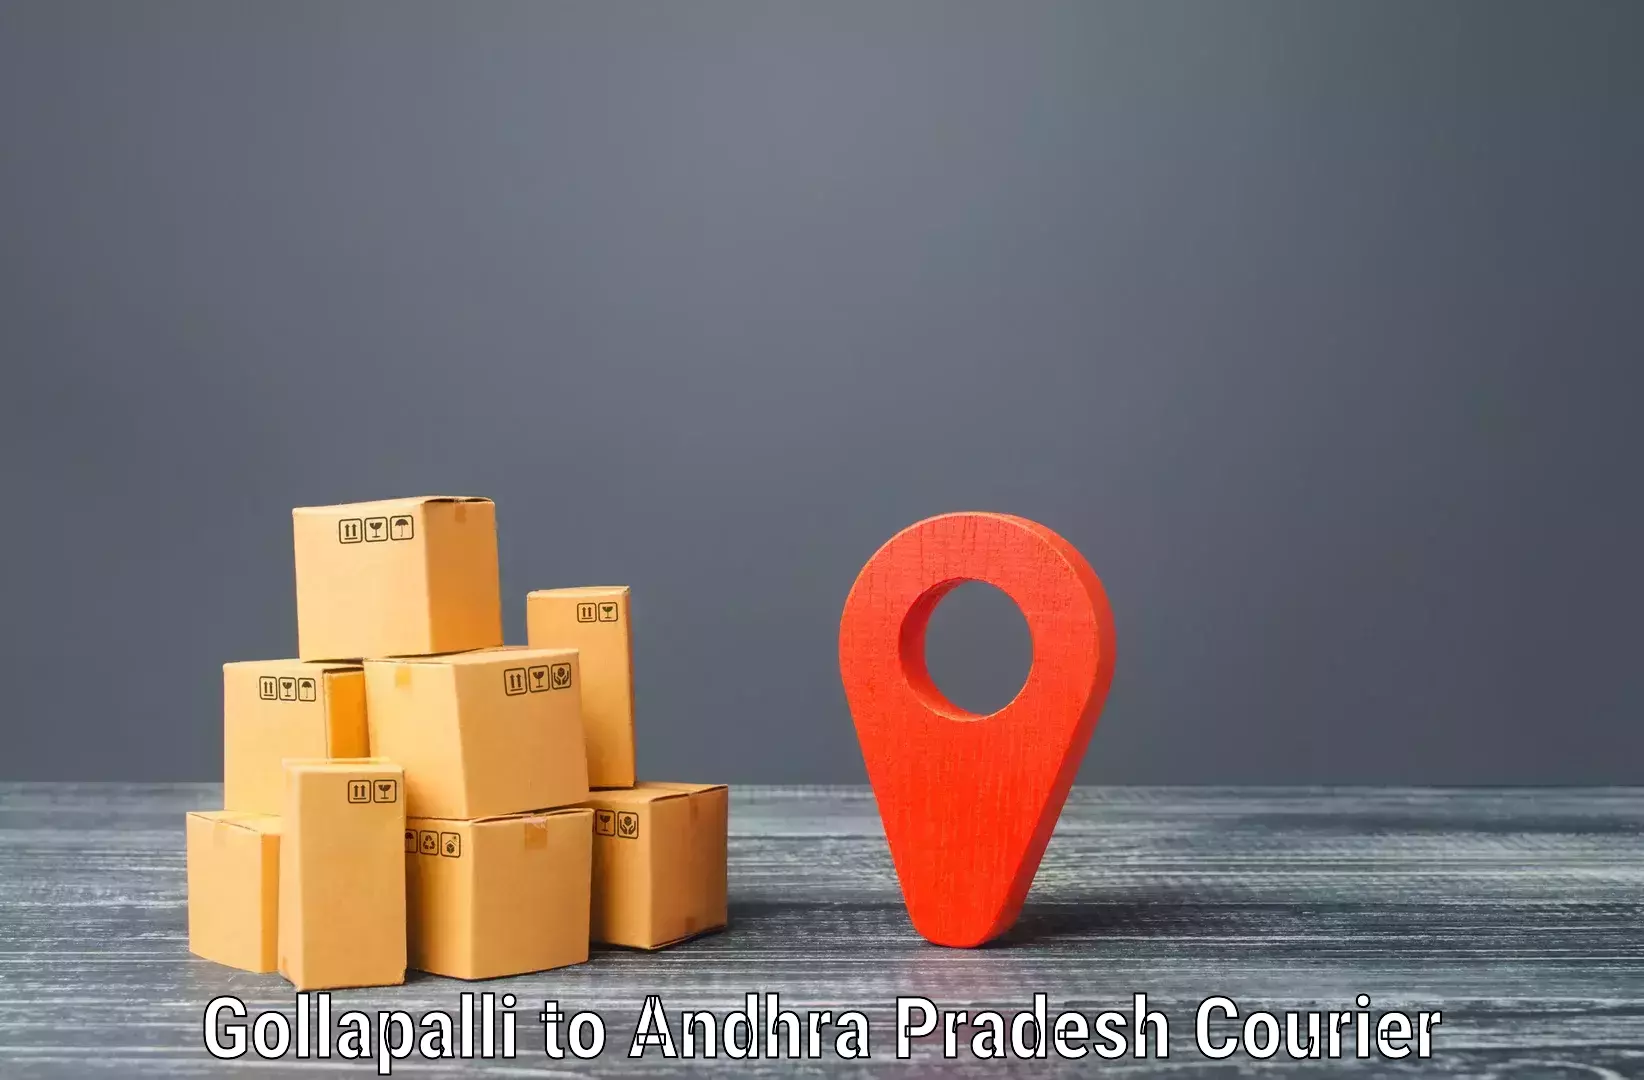 Global shipping networks Gollapalli to Venkatagiri